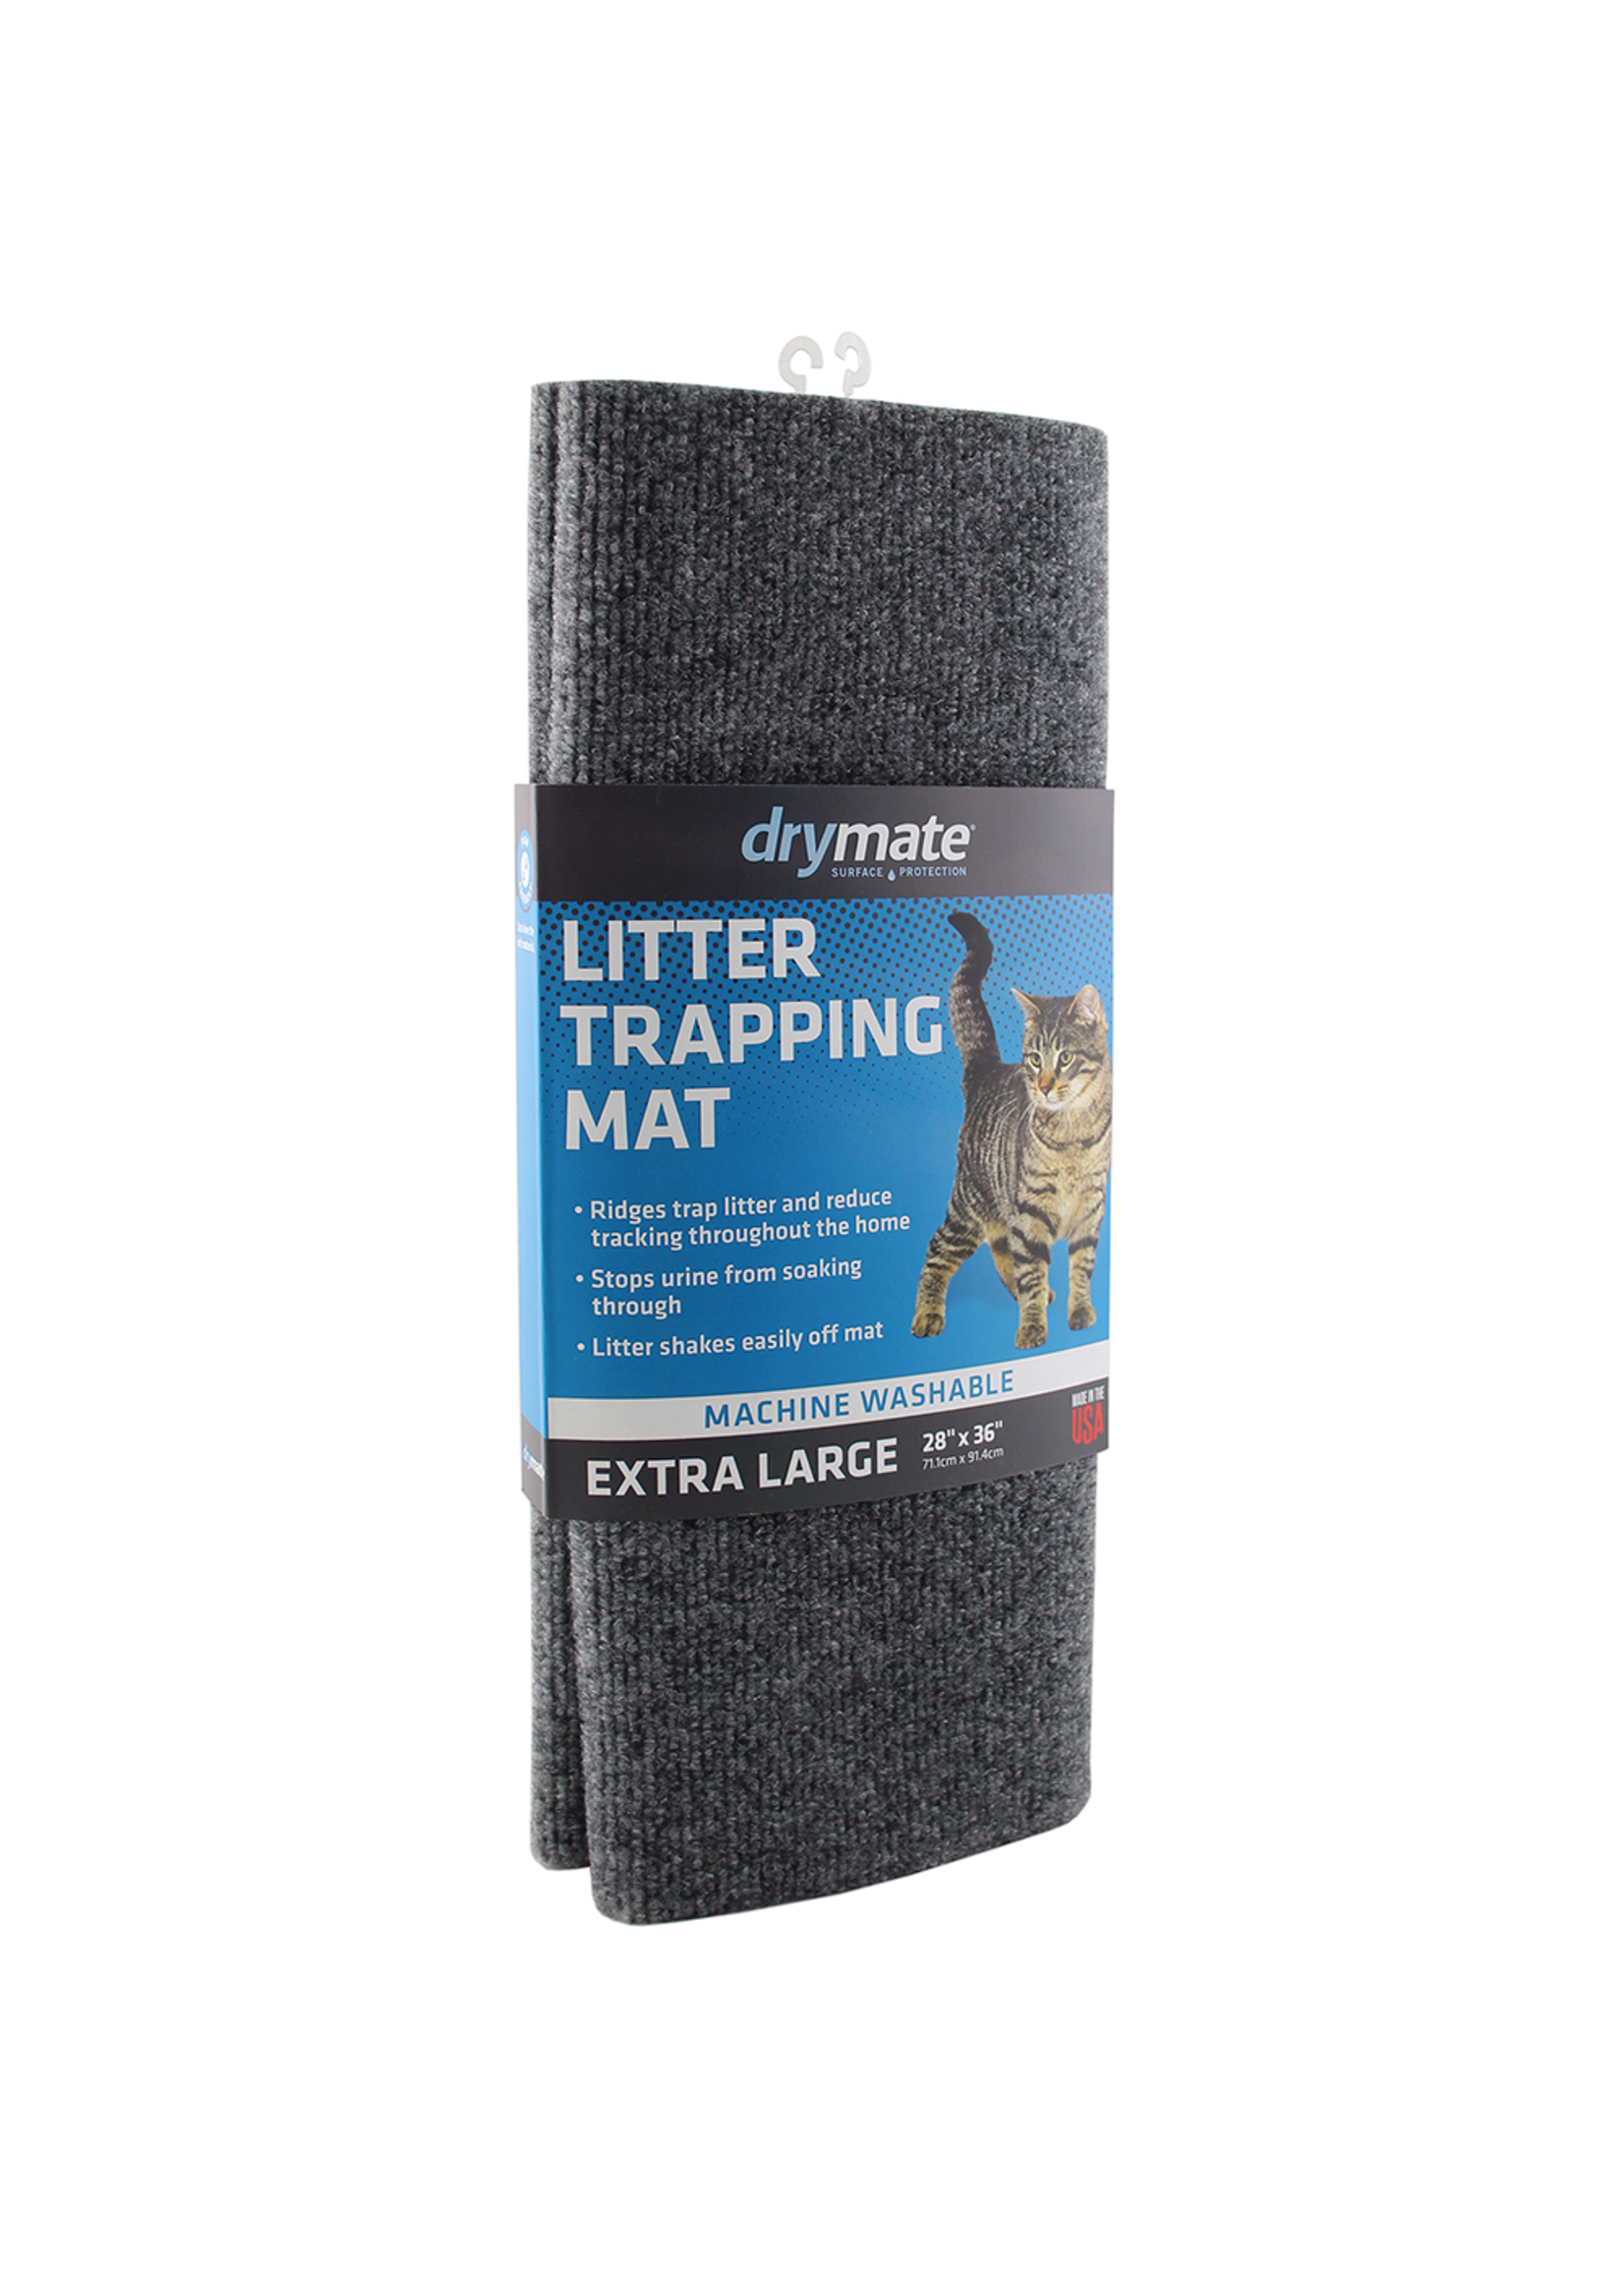 Drymate Drymate Cat Litter Mat Savannah Grey 29 x 36"